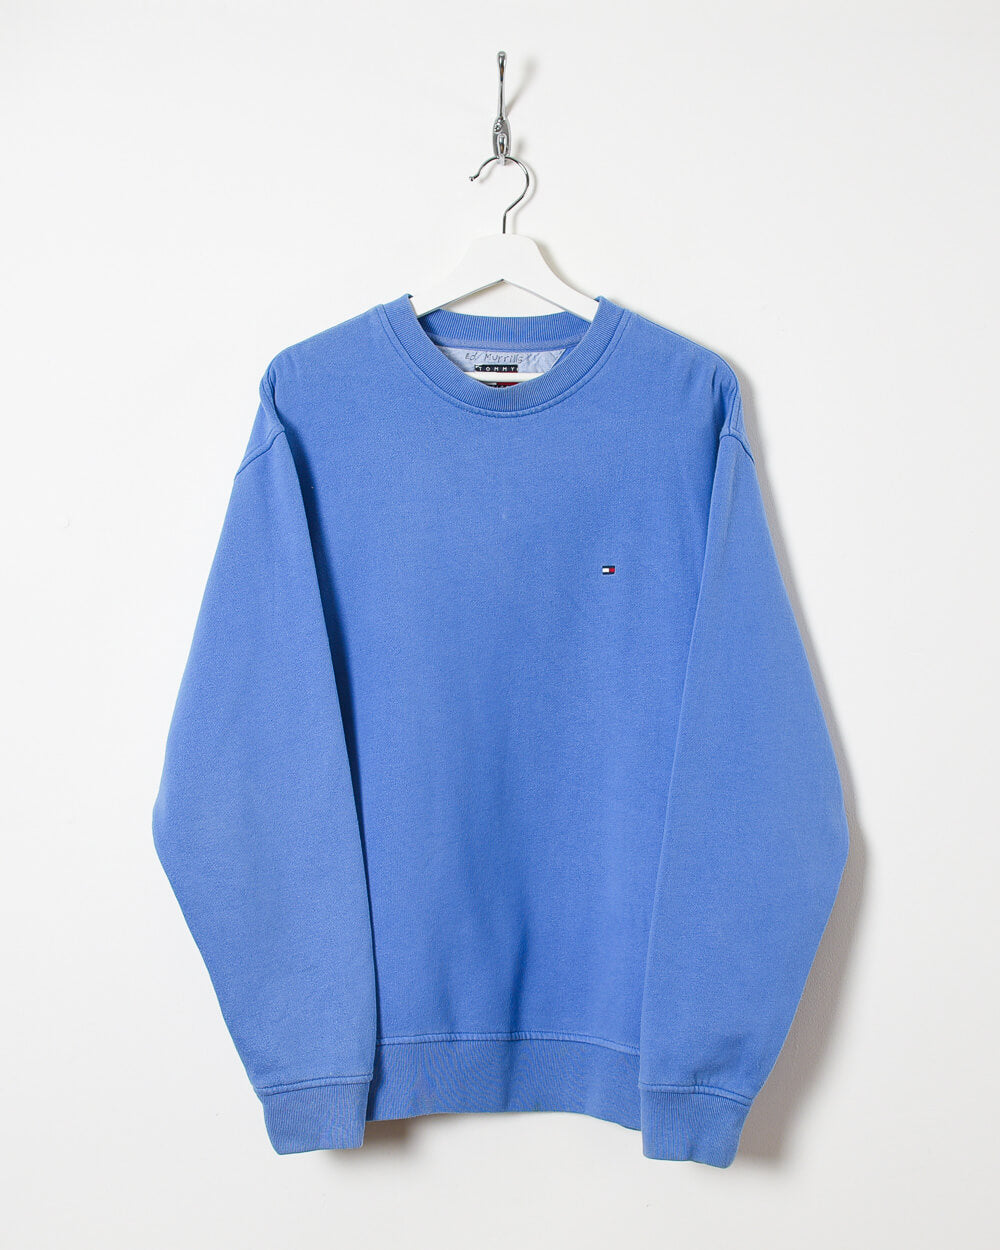 Tommy Hilfiger Sweatshirt - Medium - Domno Vintage 90s, 80s, 00s Retro and Vintage Clothing 